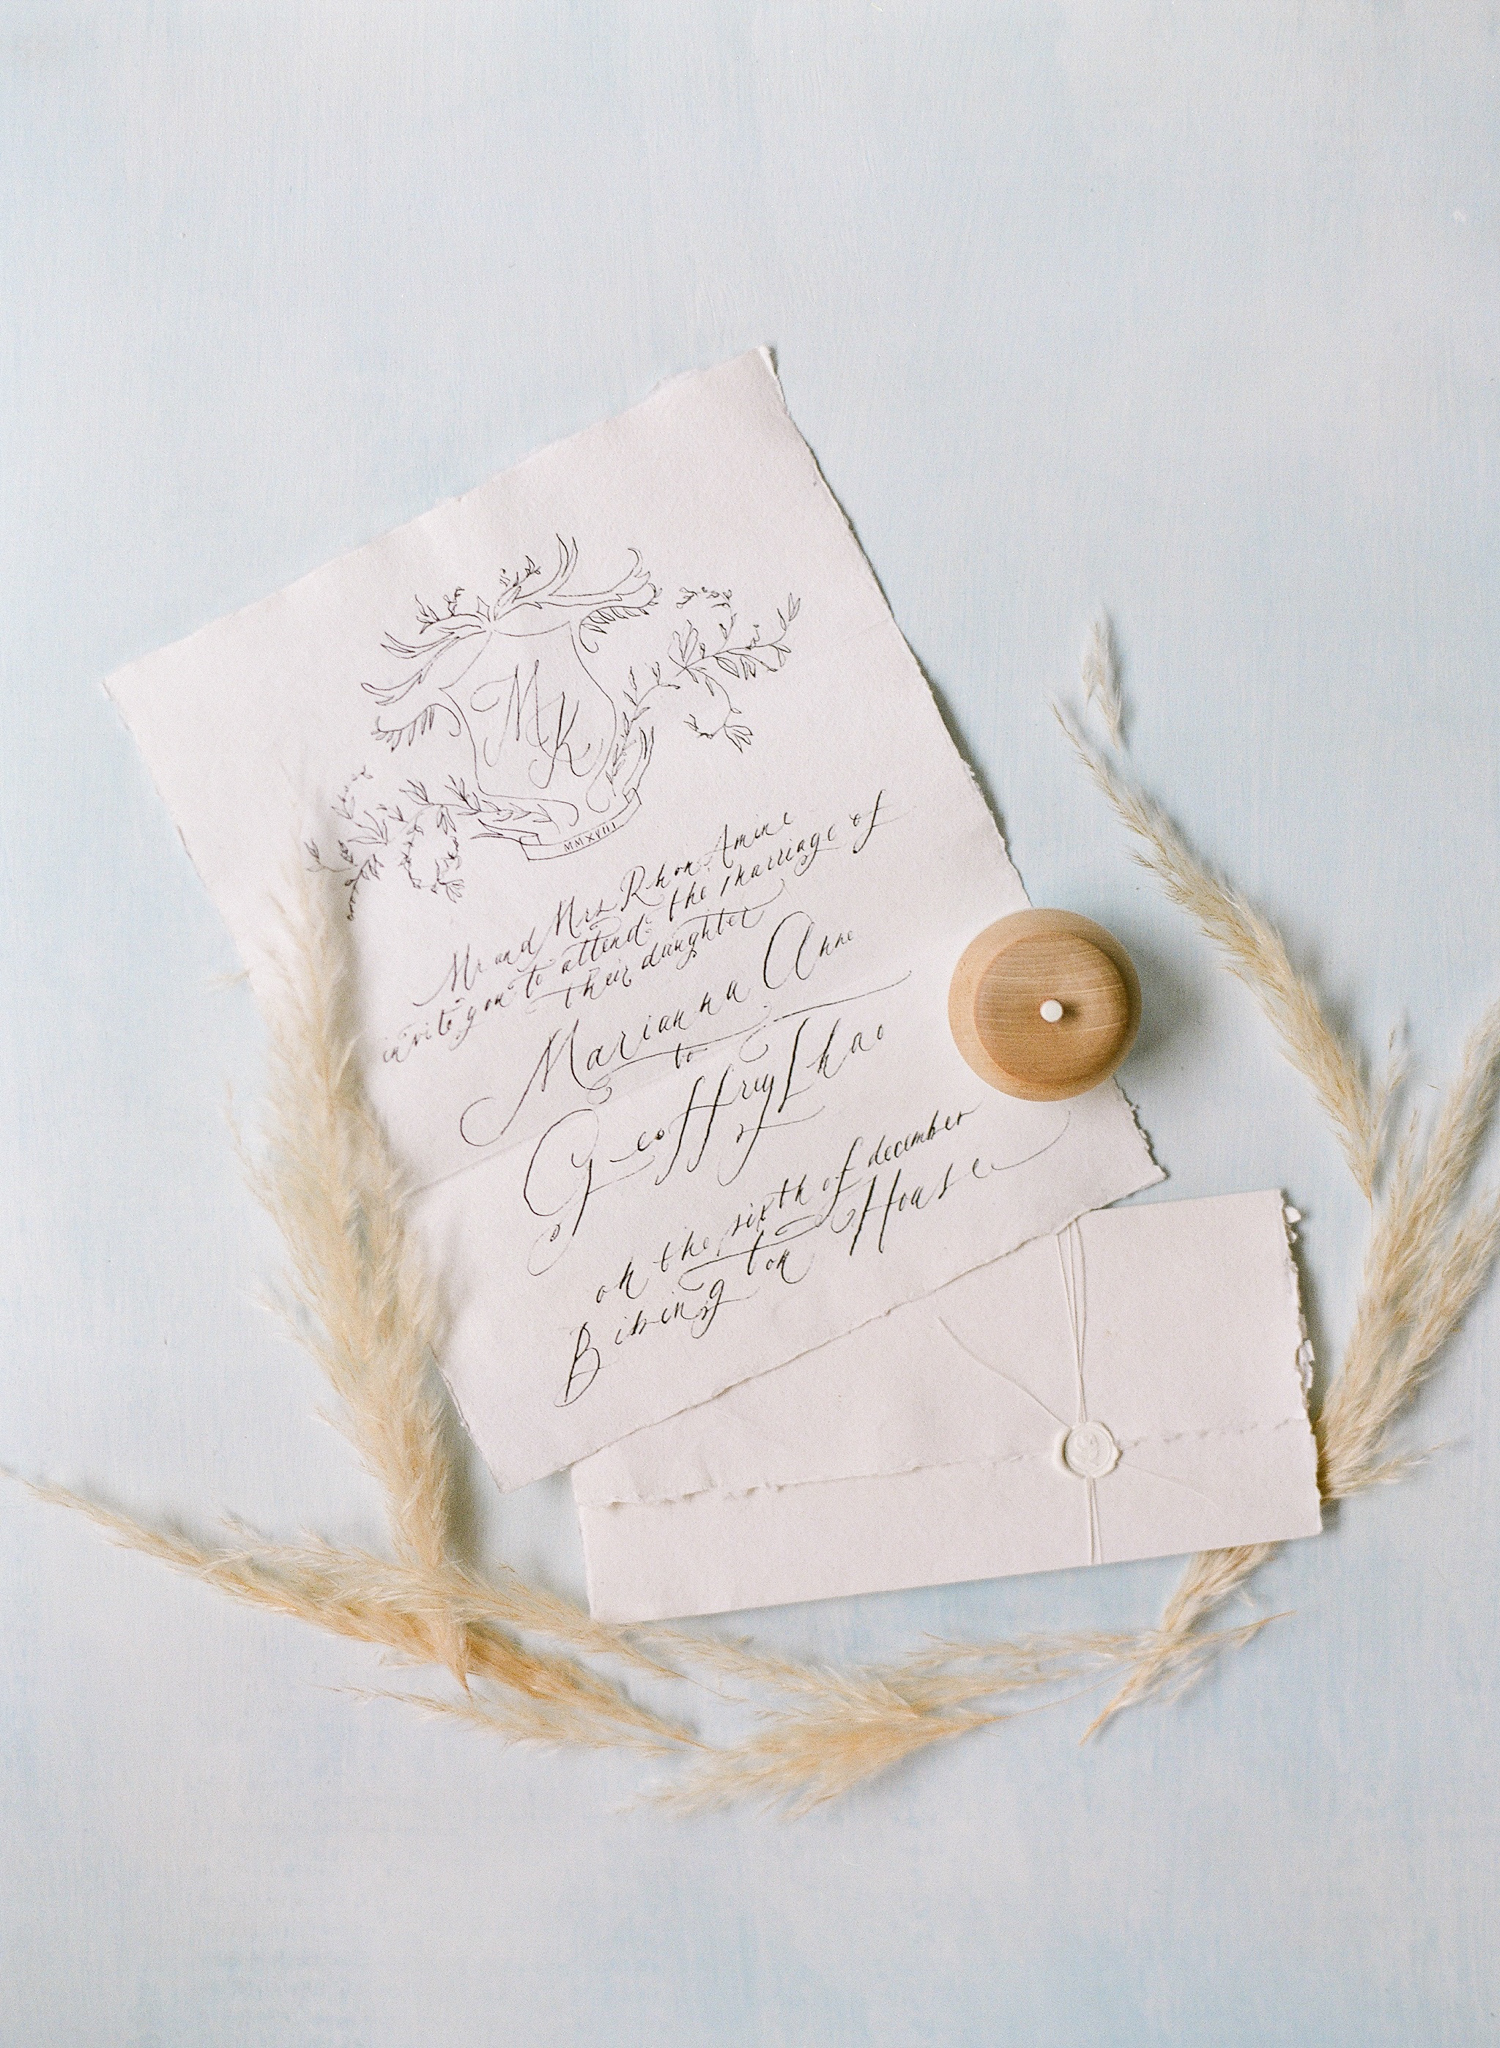 Fine Art Wedding Photographer Paris | Molly Carr Photography | Isibeal Studio | Tara Nicole Weddings | Shasta Bell Calligraph | Wedding Invitation Love Letter | Handmade Paper